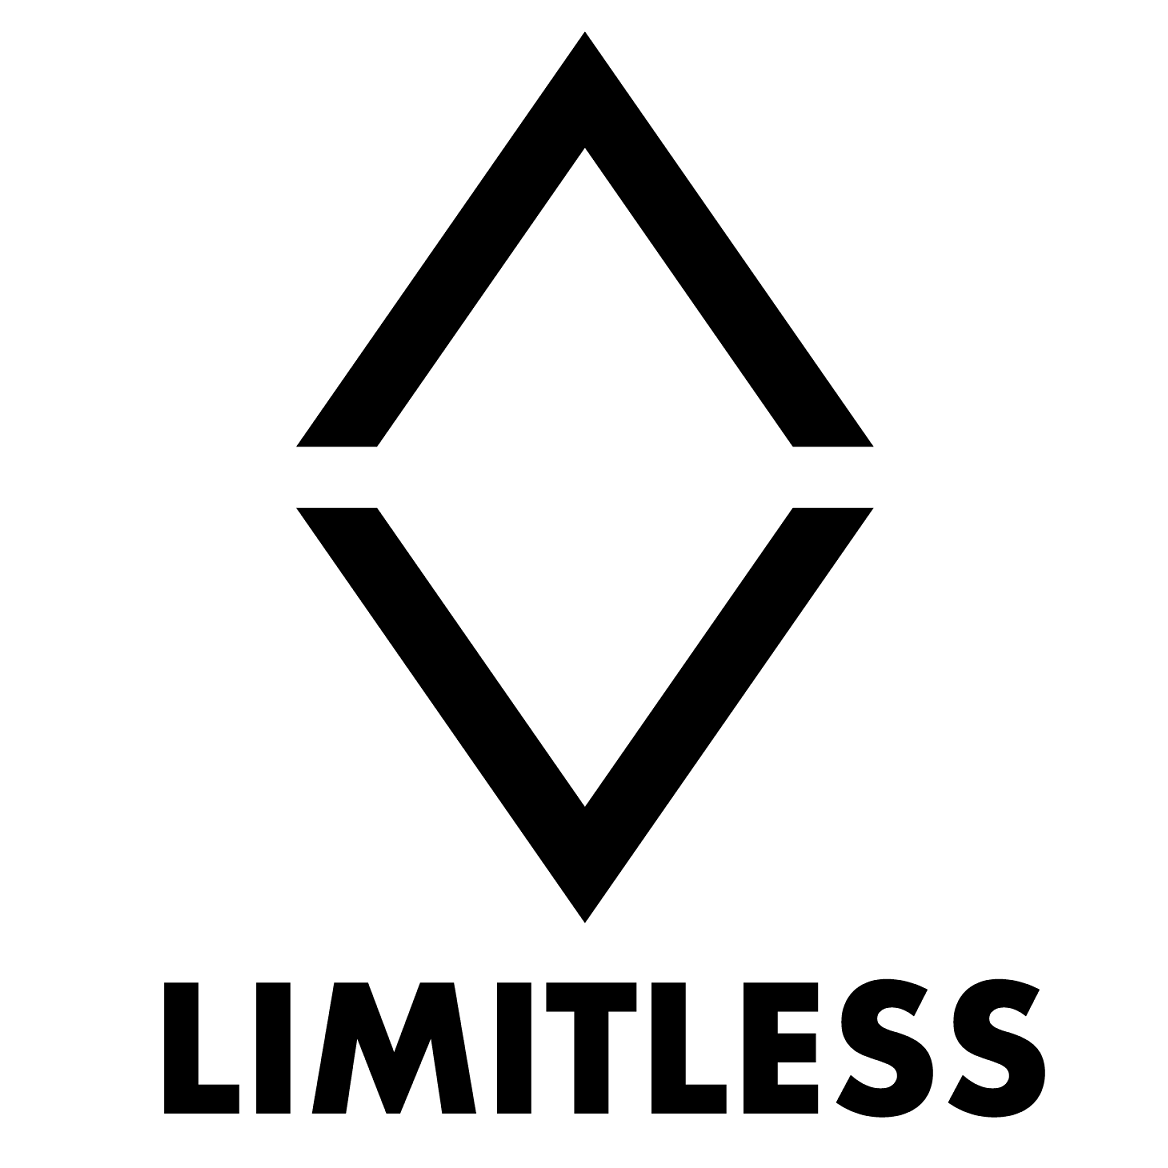 Limitless (ltd.) company logo